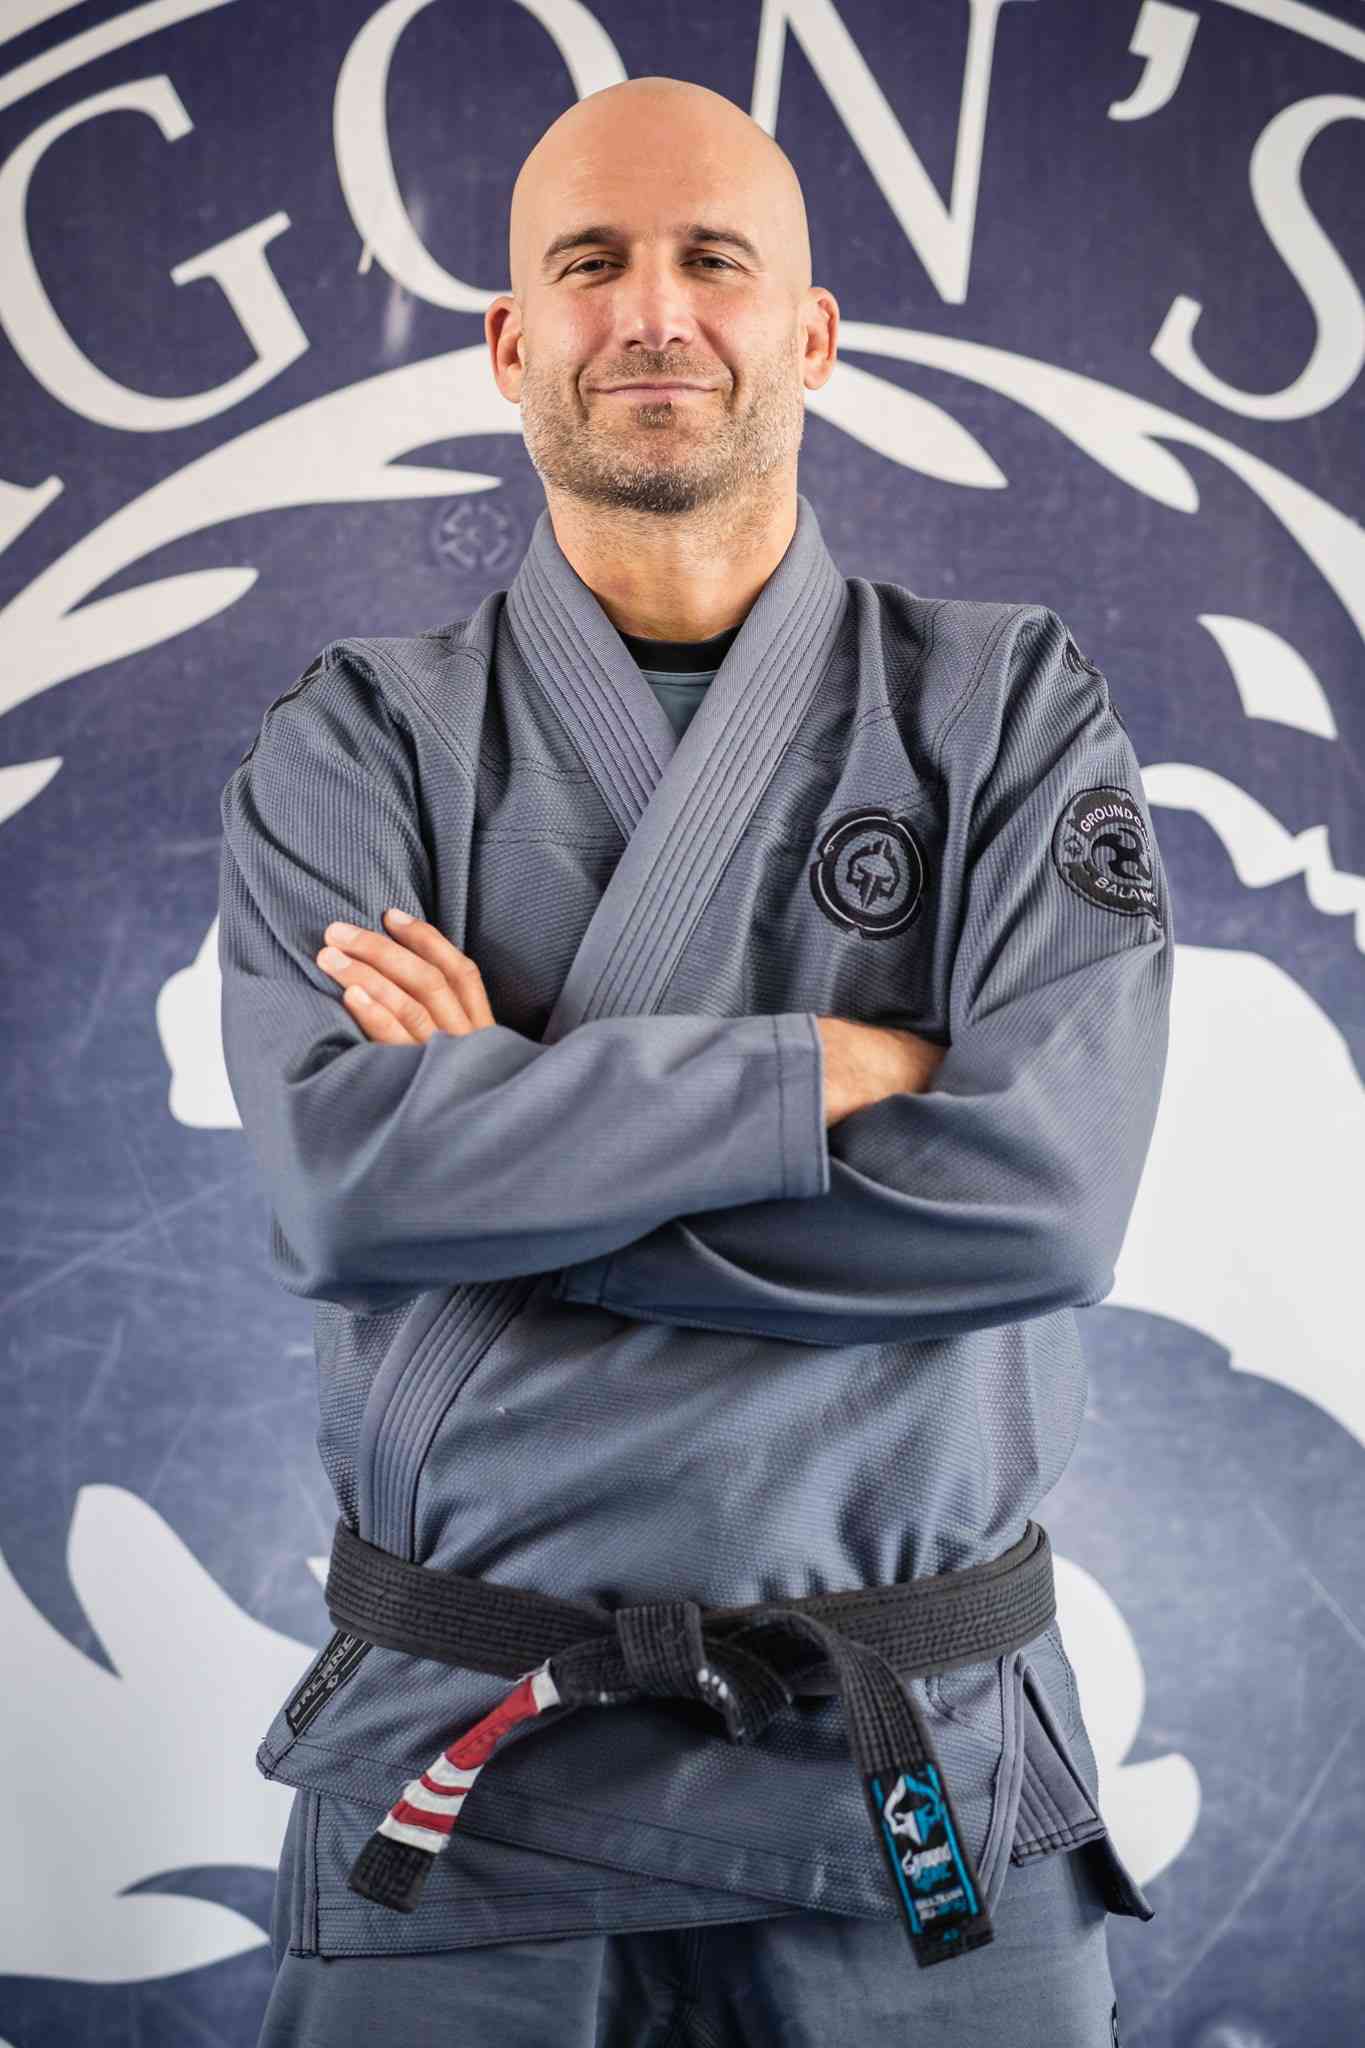 Black belt Jiu Jitsu instructor from Warsaw